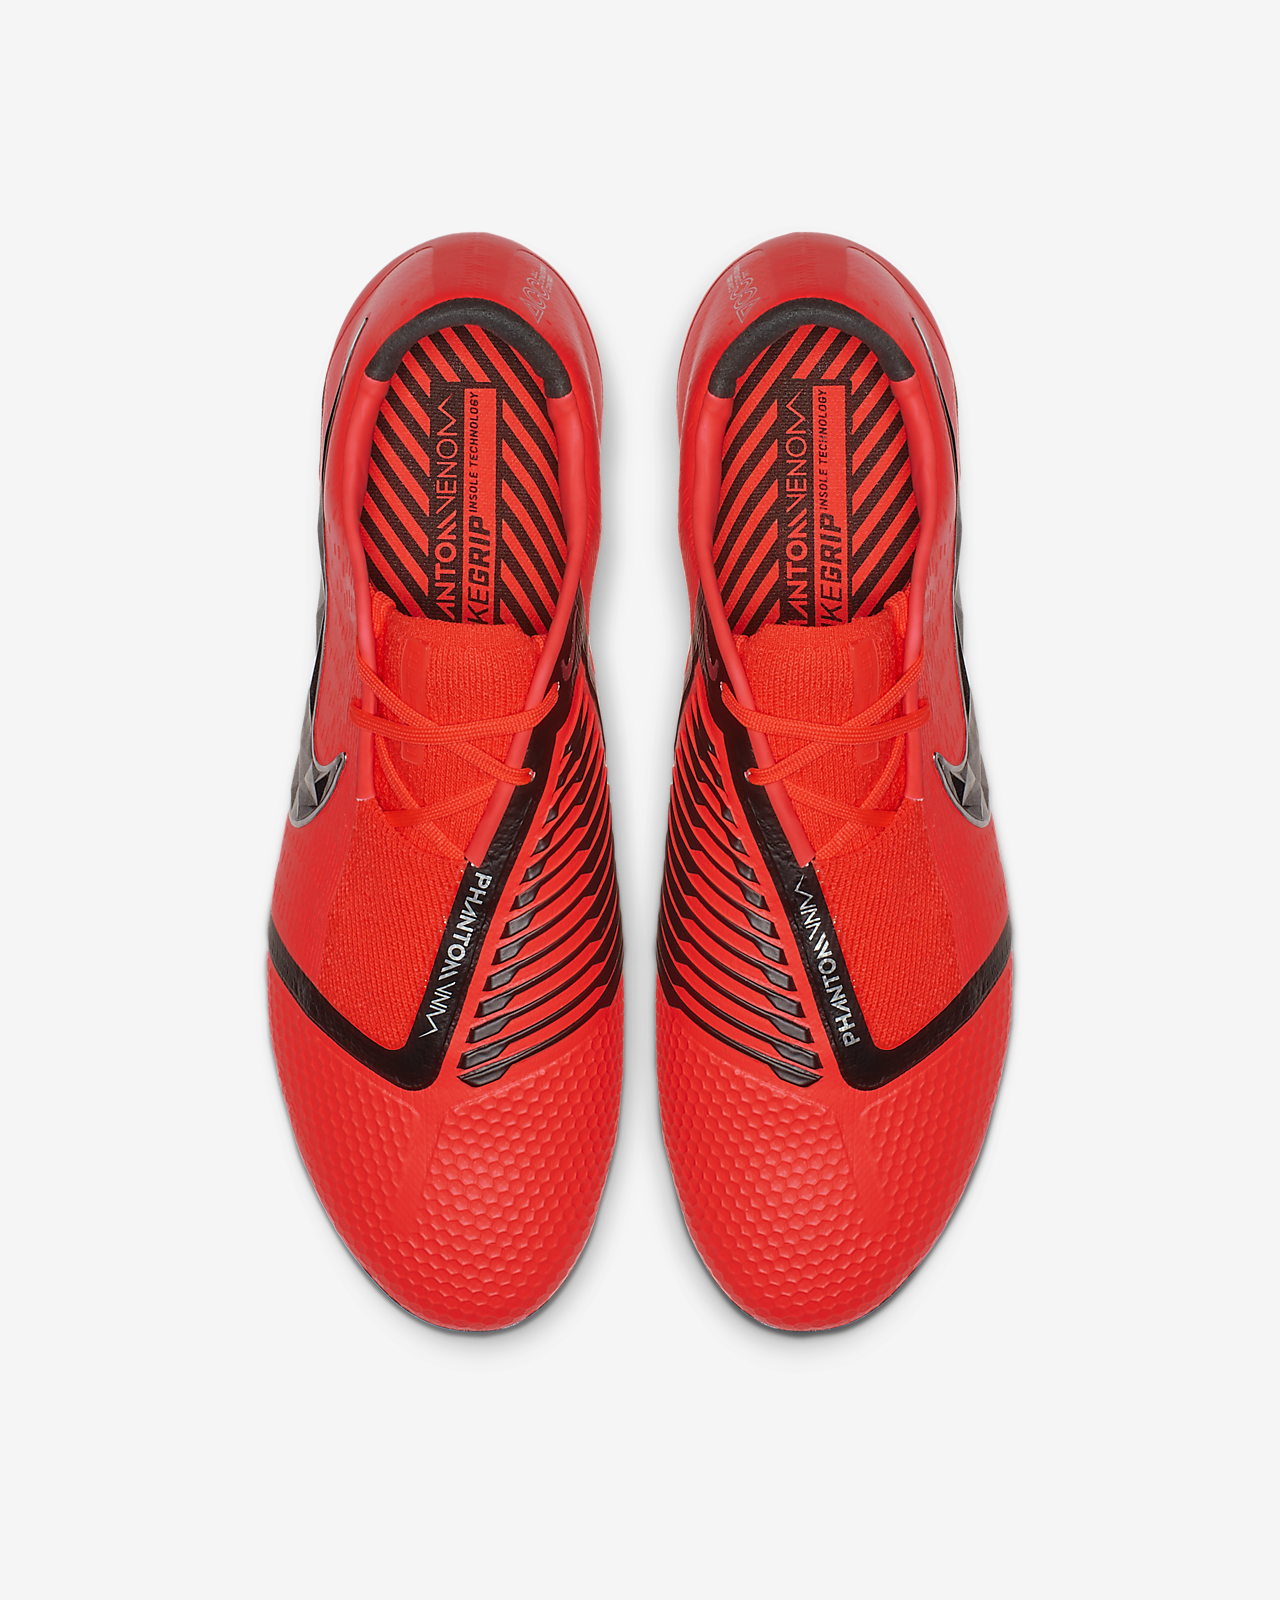 Nike Soccer Boots 2015 Hypervenom II Phantom TF Green